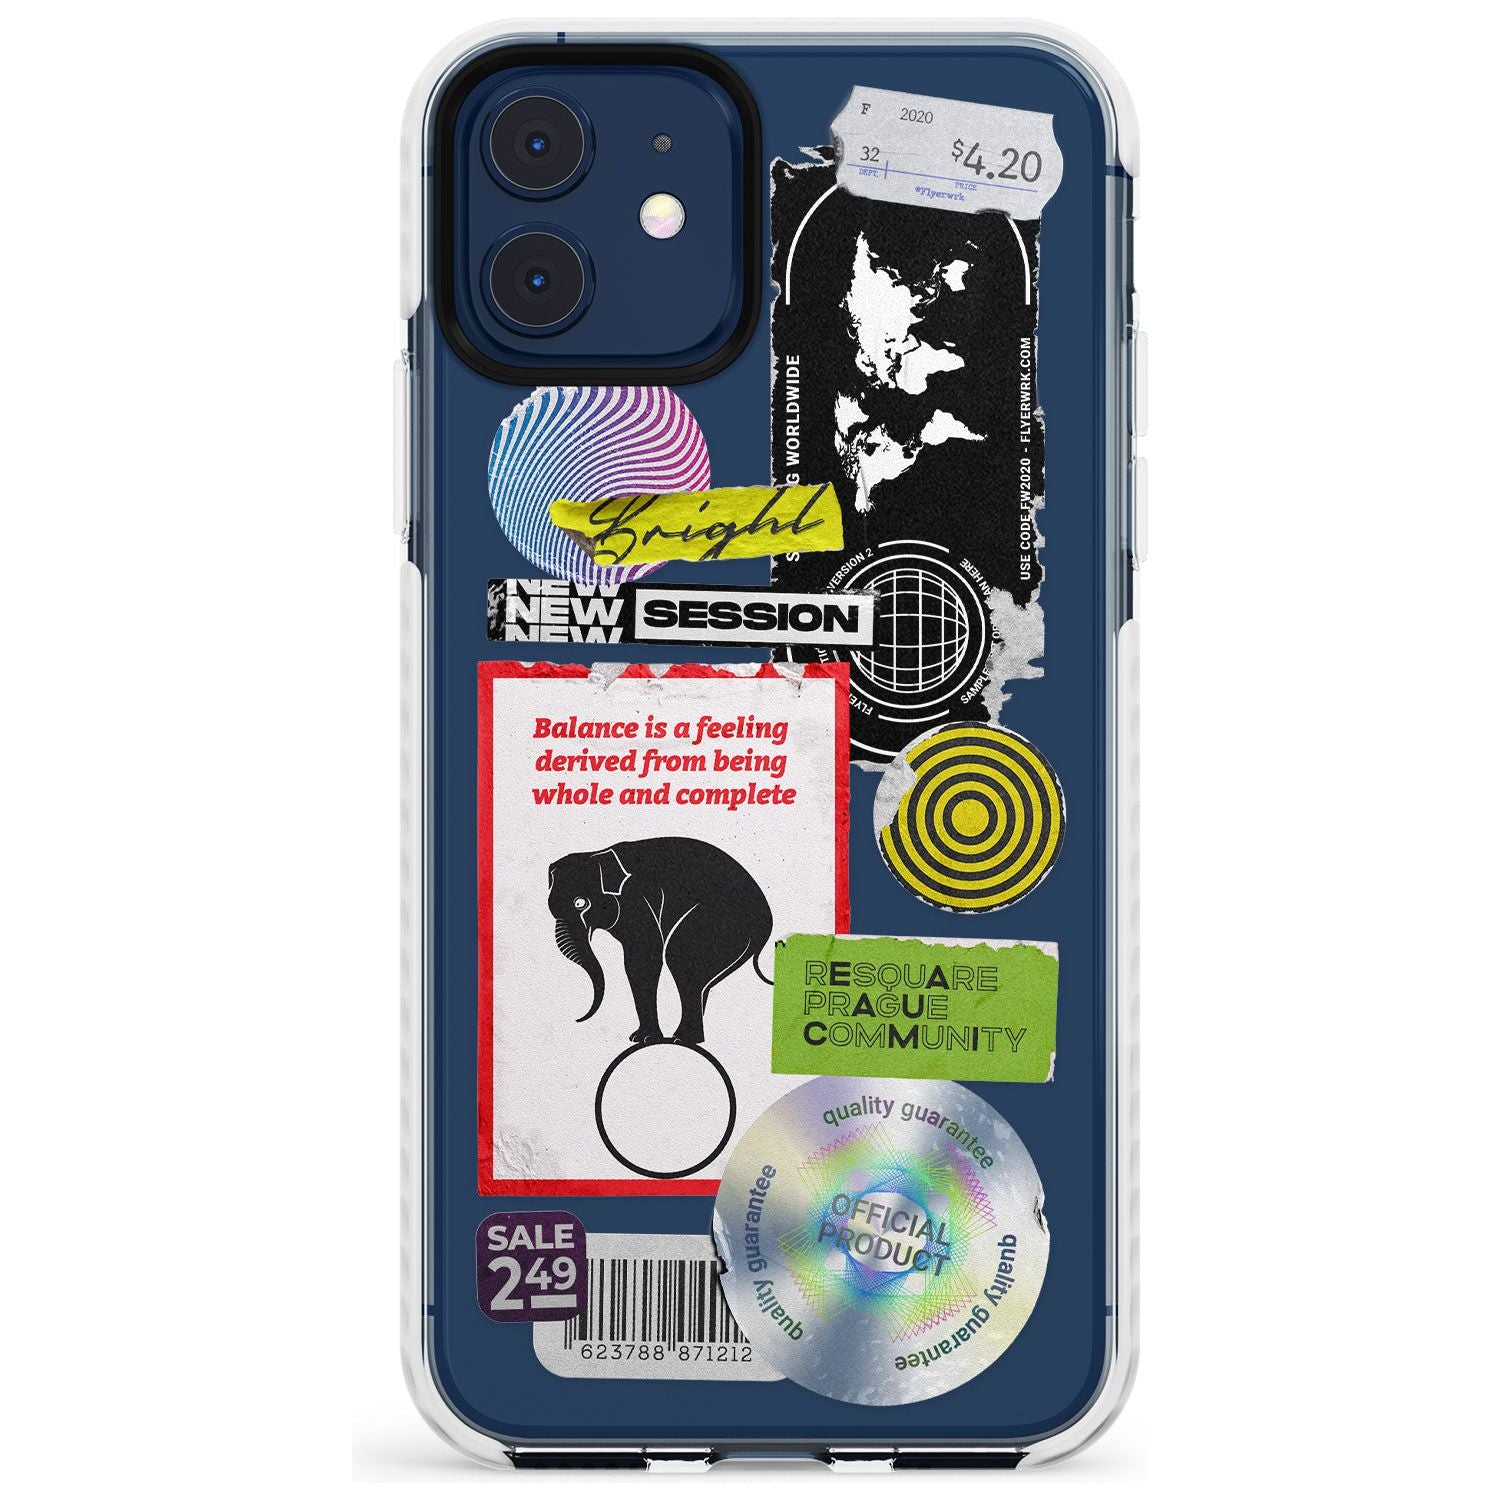 Peeled Sticker Mix Slim TPU Phone Case for iPhone 11